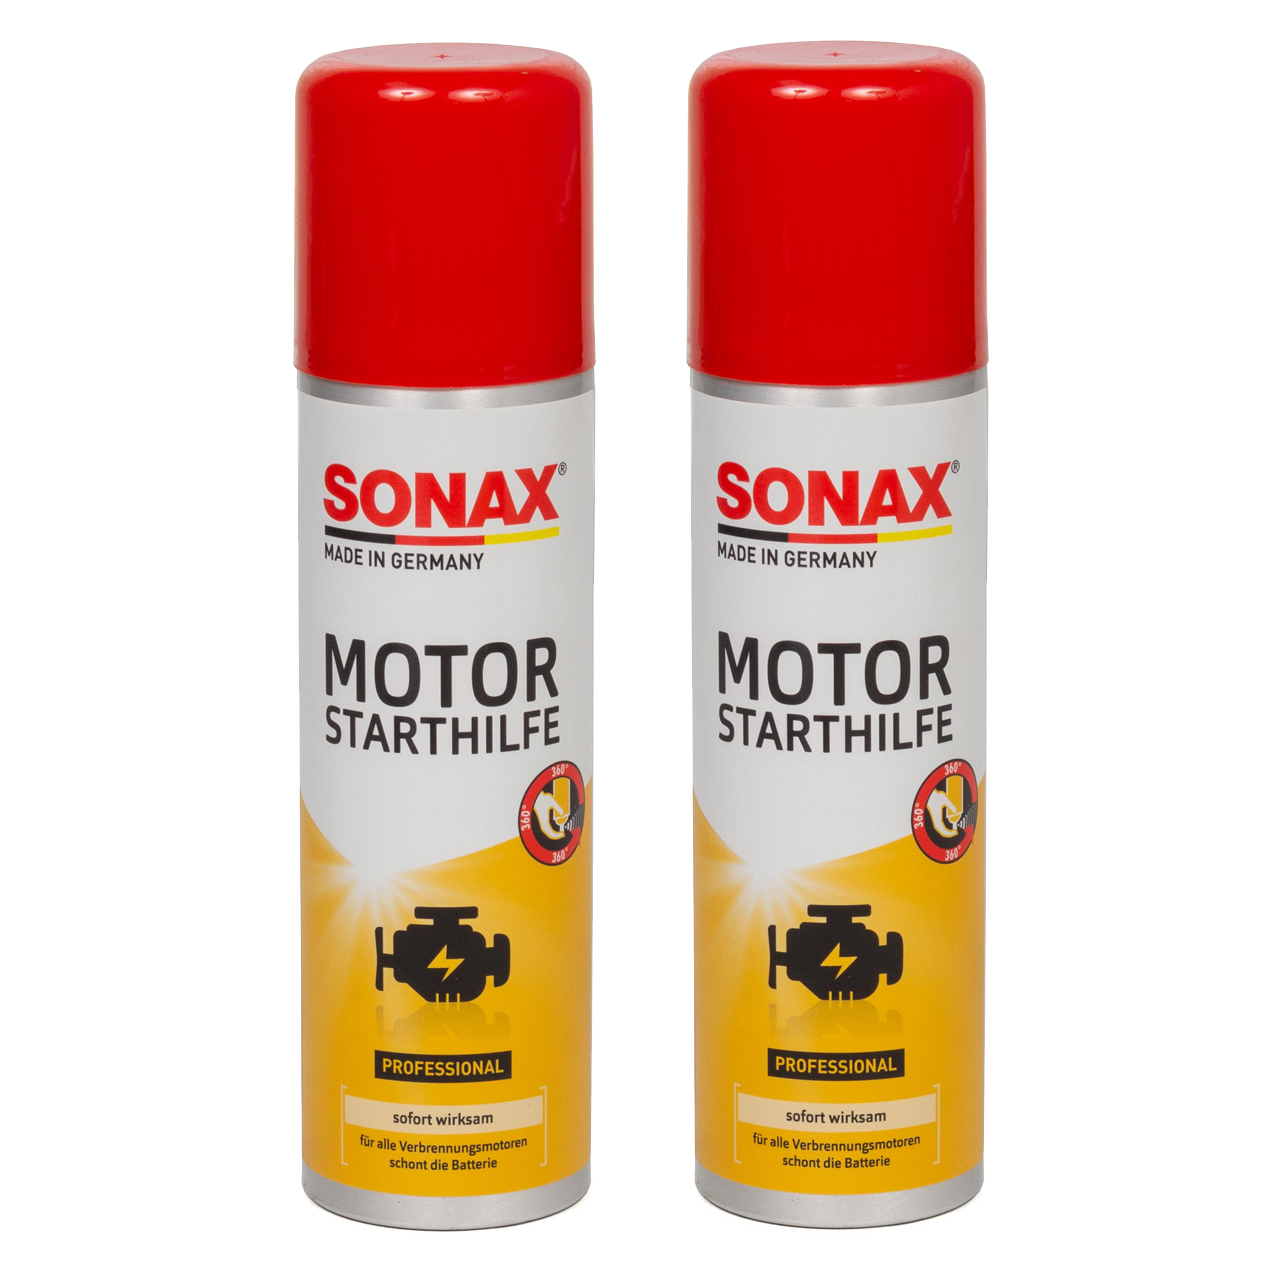 SONAX 312100 Motor Starthilfe Starpilot Starthilfespray